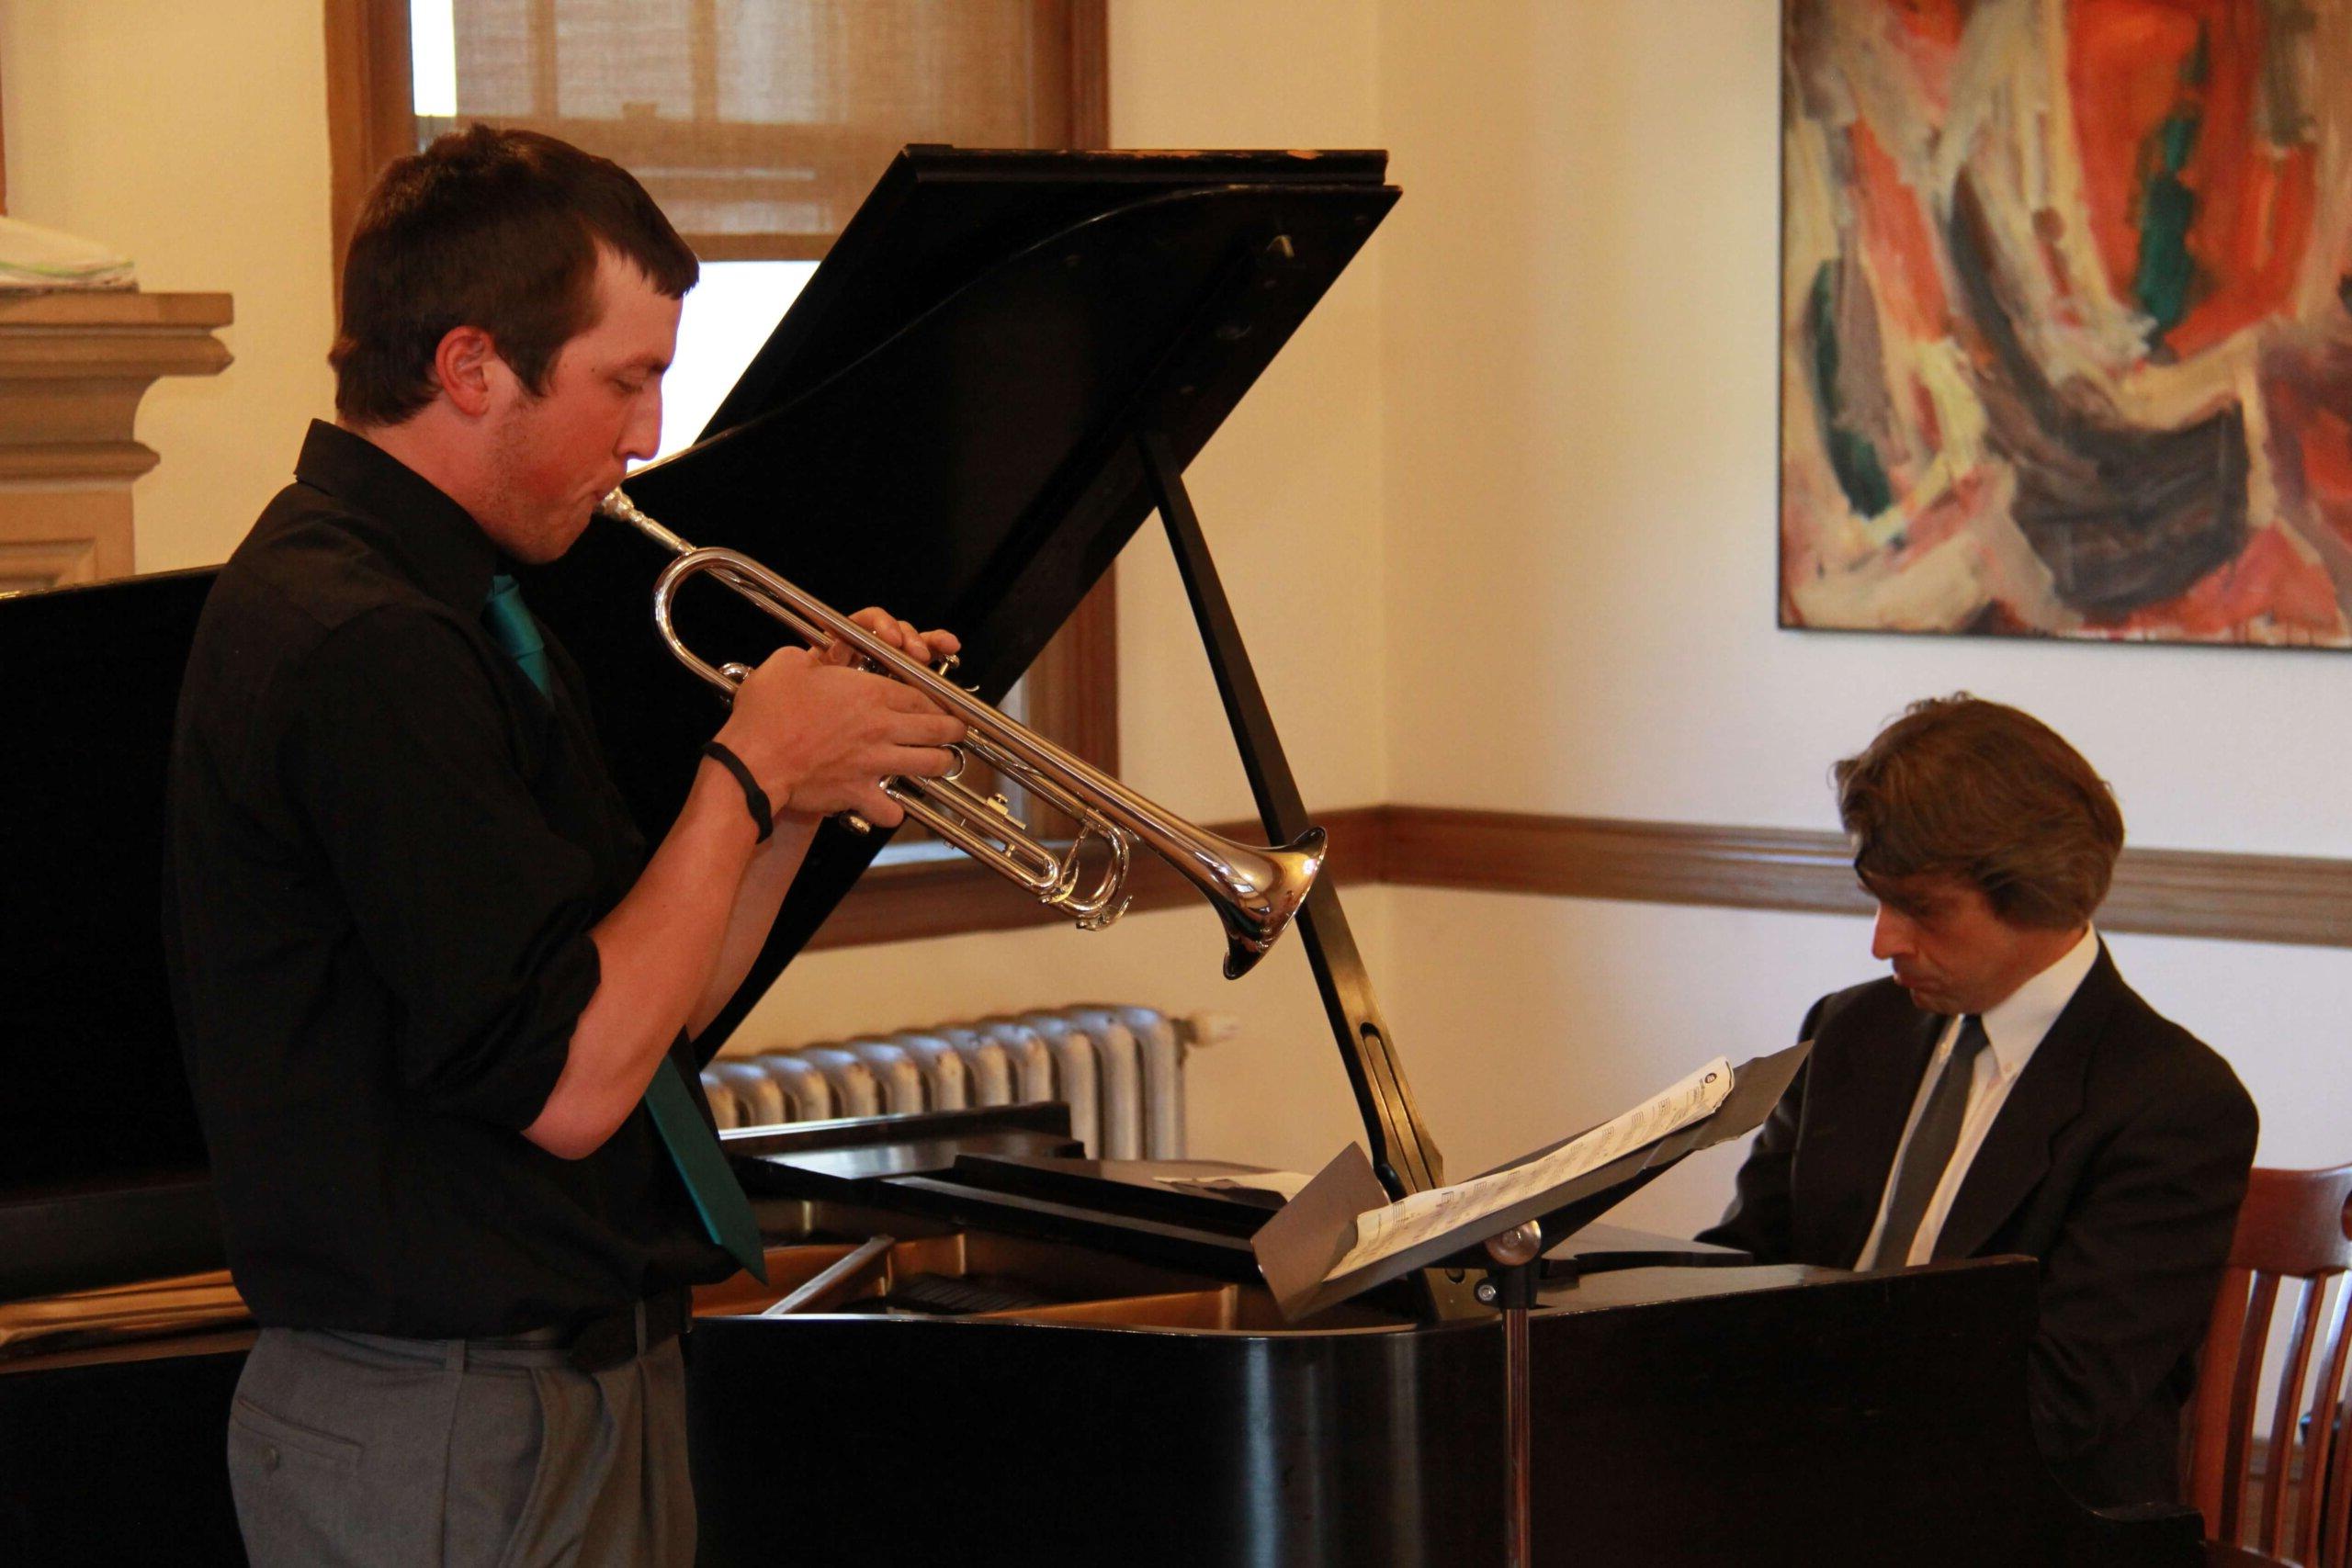 Chris Bakriges教授弹钢琴和一个学生吹小号的照片